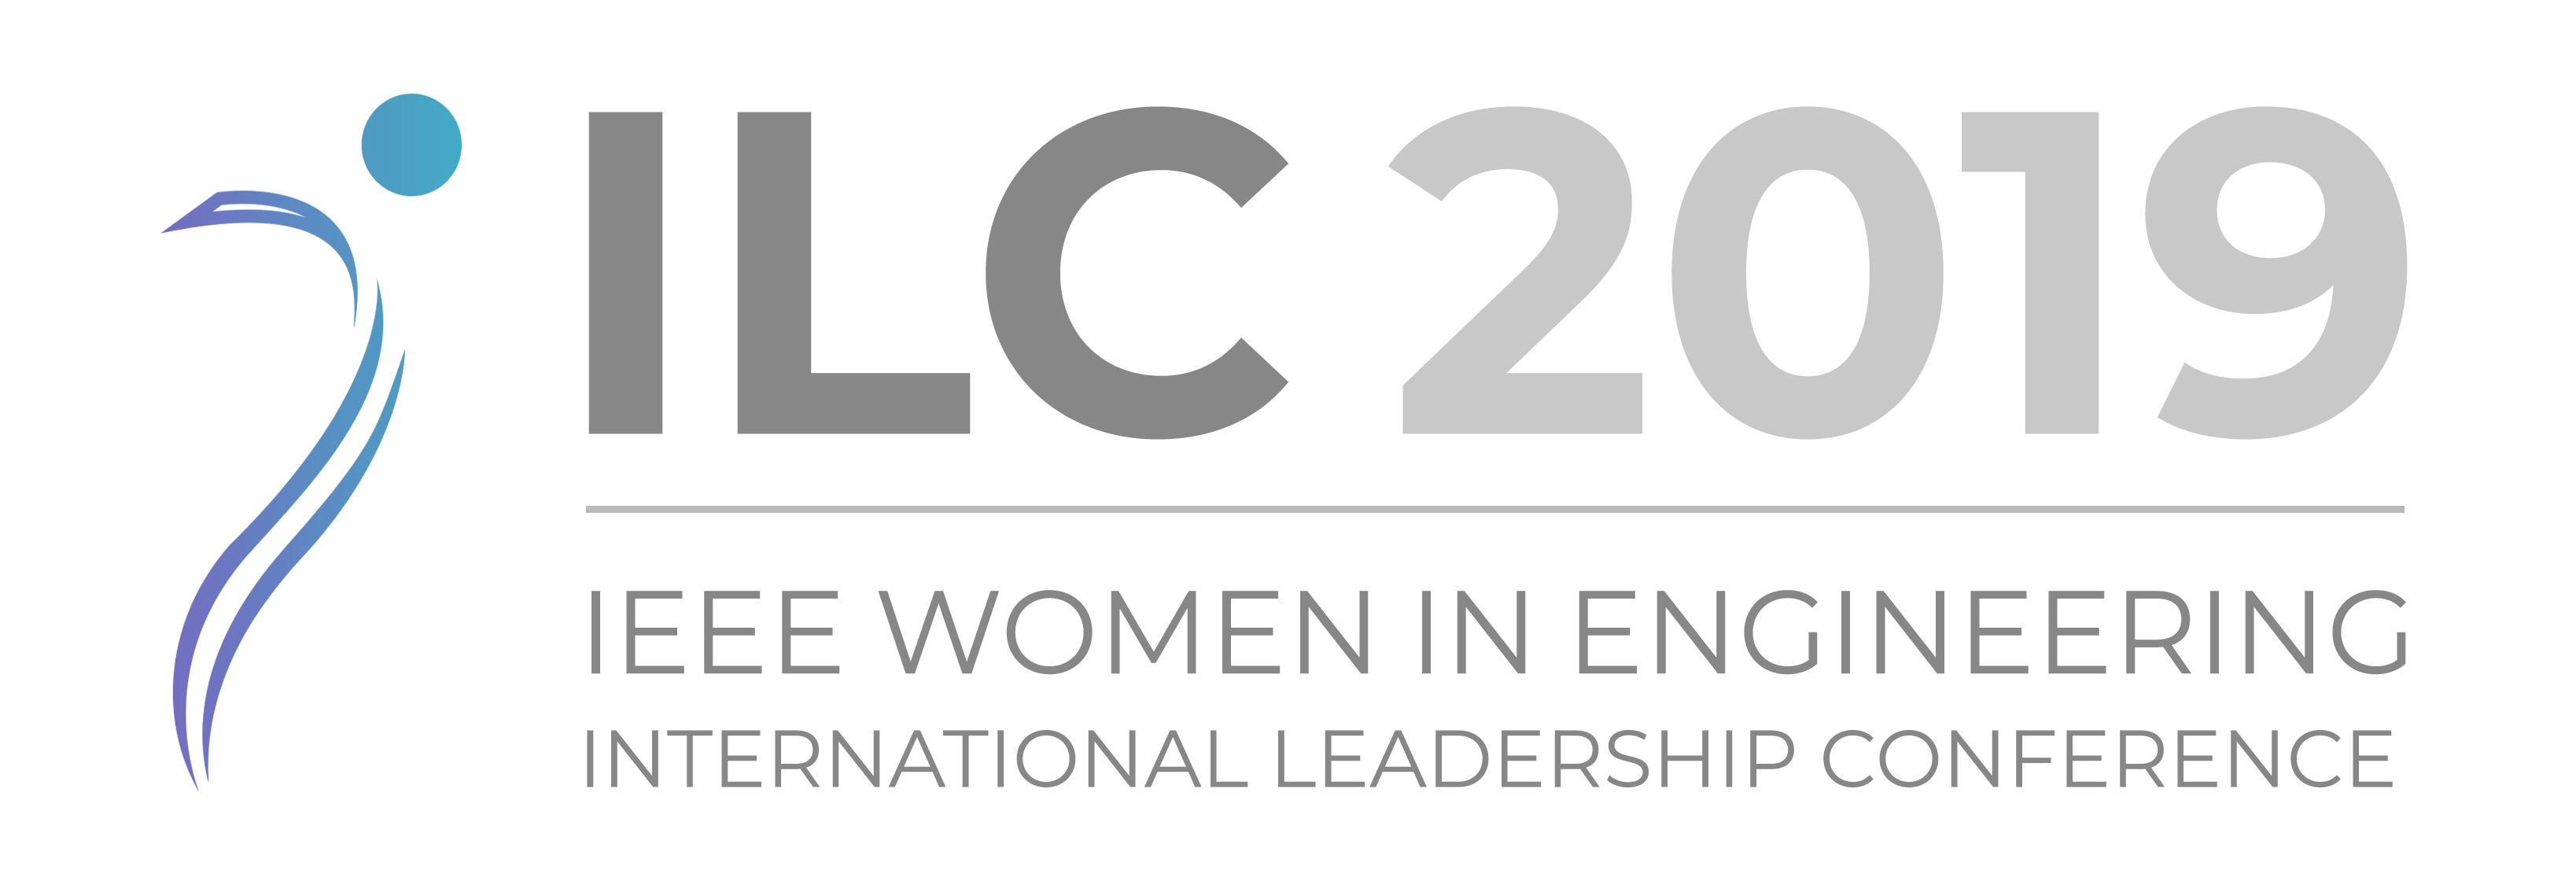 ILC 2019 Logo. IEEE Women in Engineering International Leadership Conference